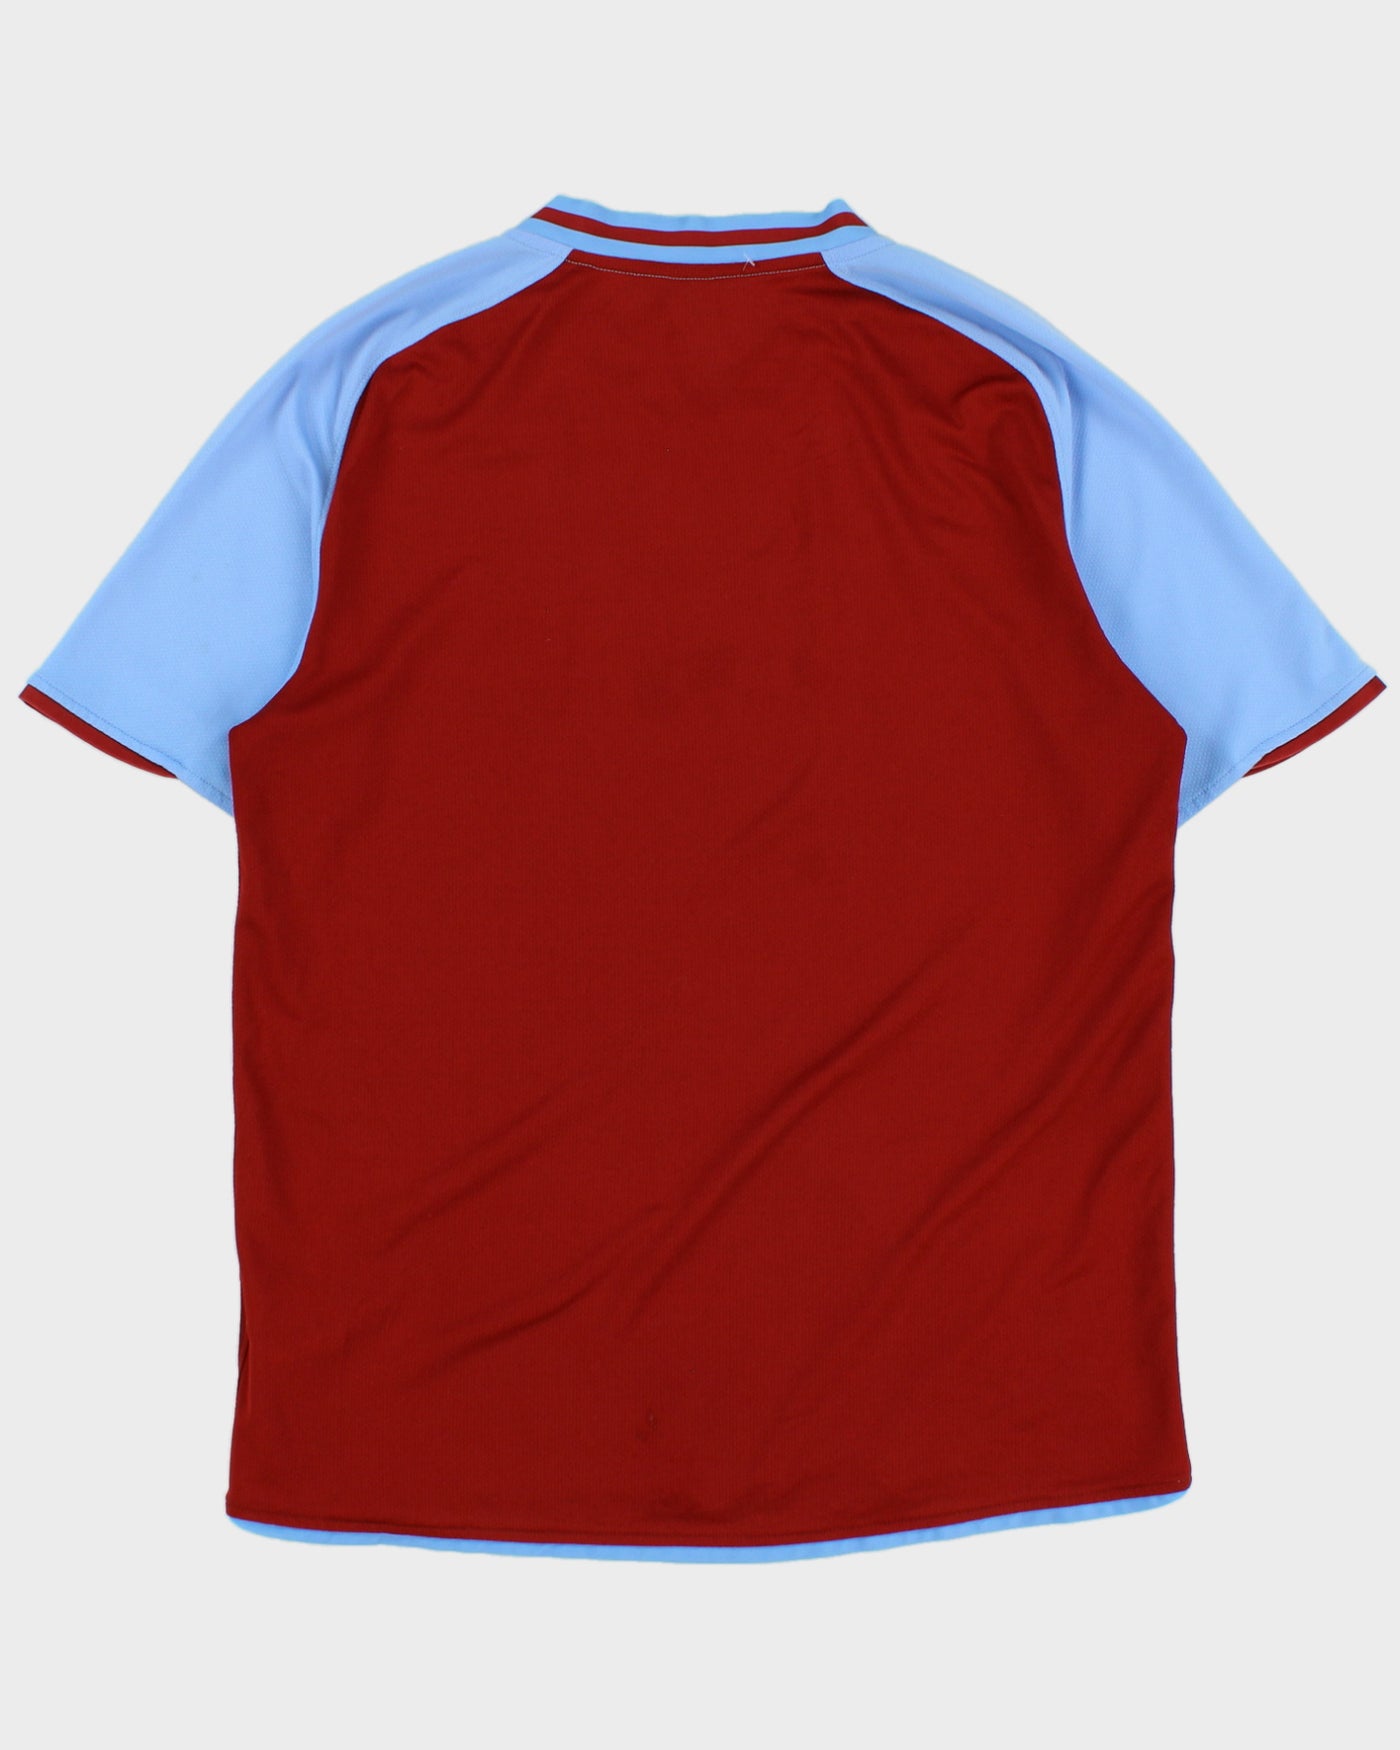 00s Aston Villa Nike Football Shirt - M